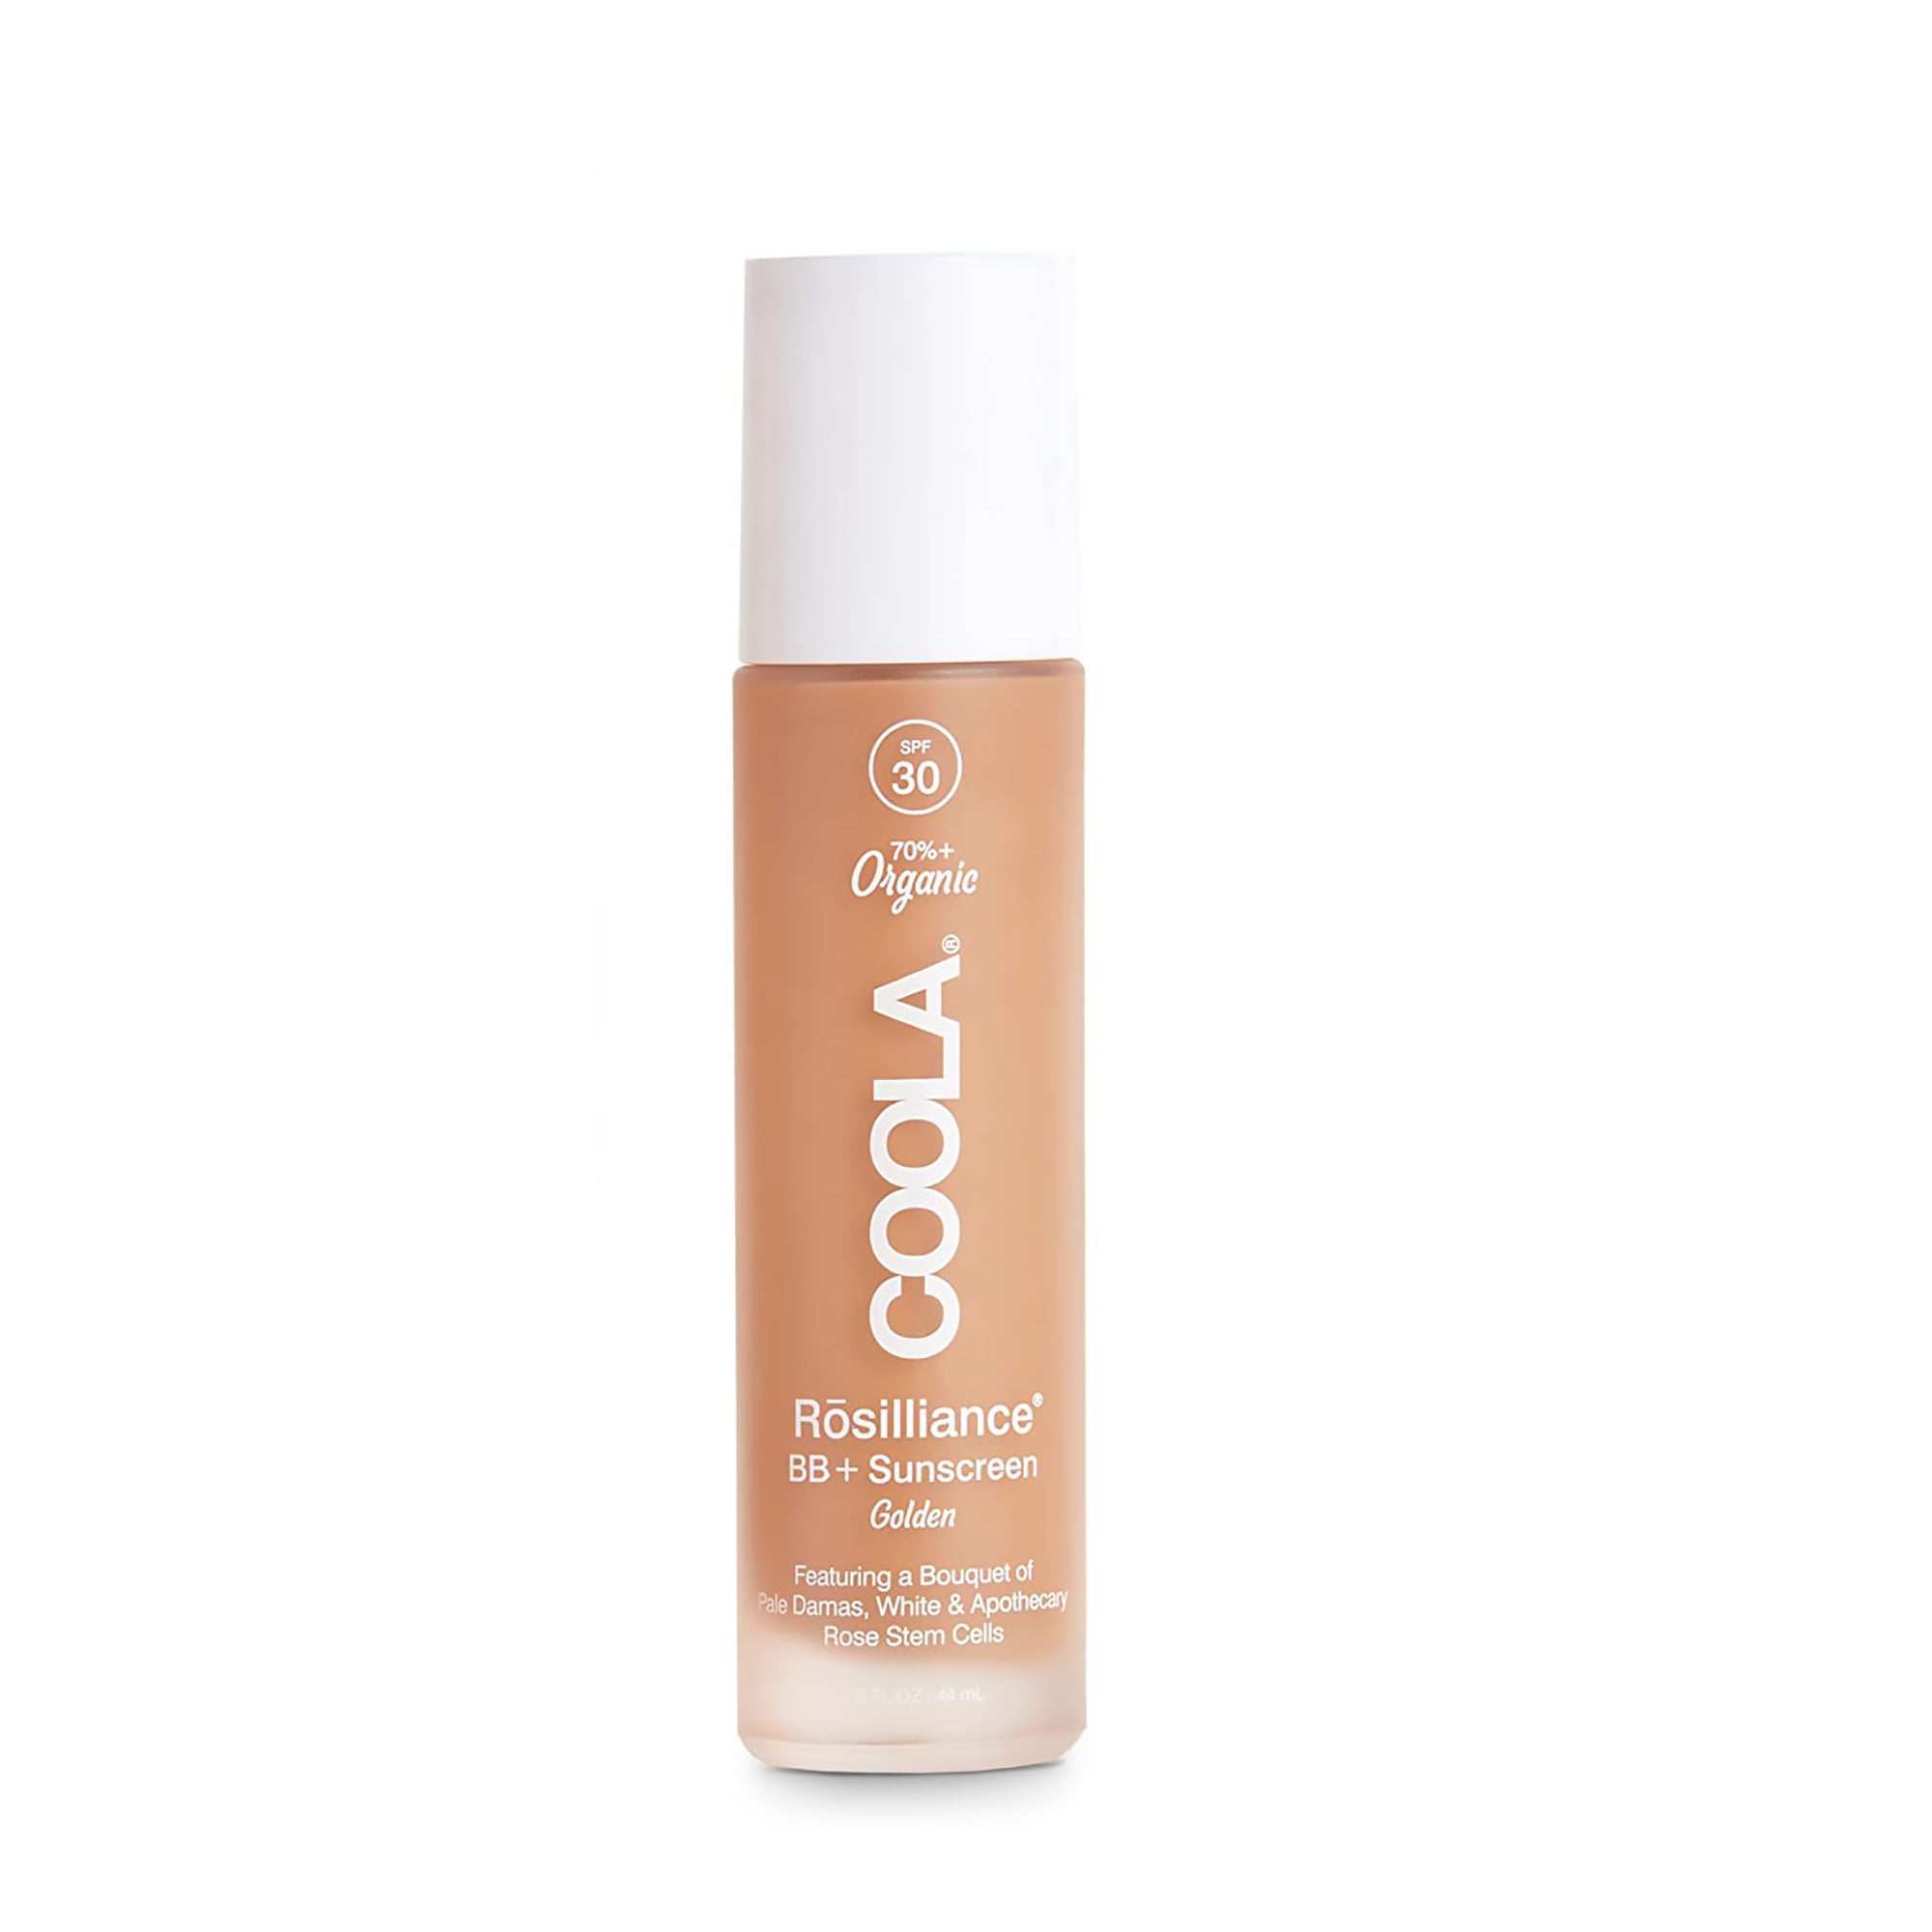 COOLA Suncare Rosilliance Mineral BB + Cream Tinted Organic Sunscreen SPF 30 - Golden Hour / golden hour